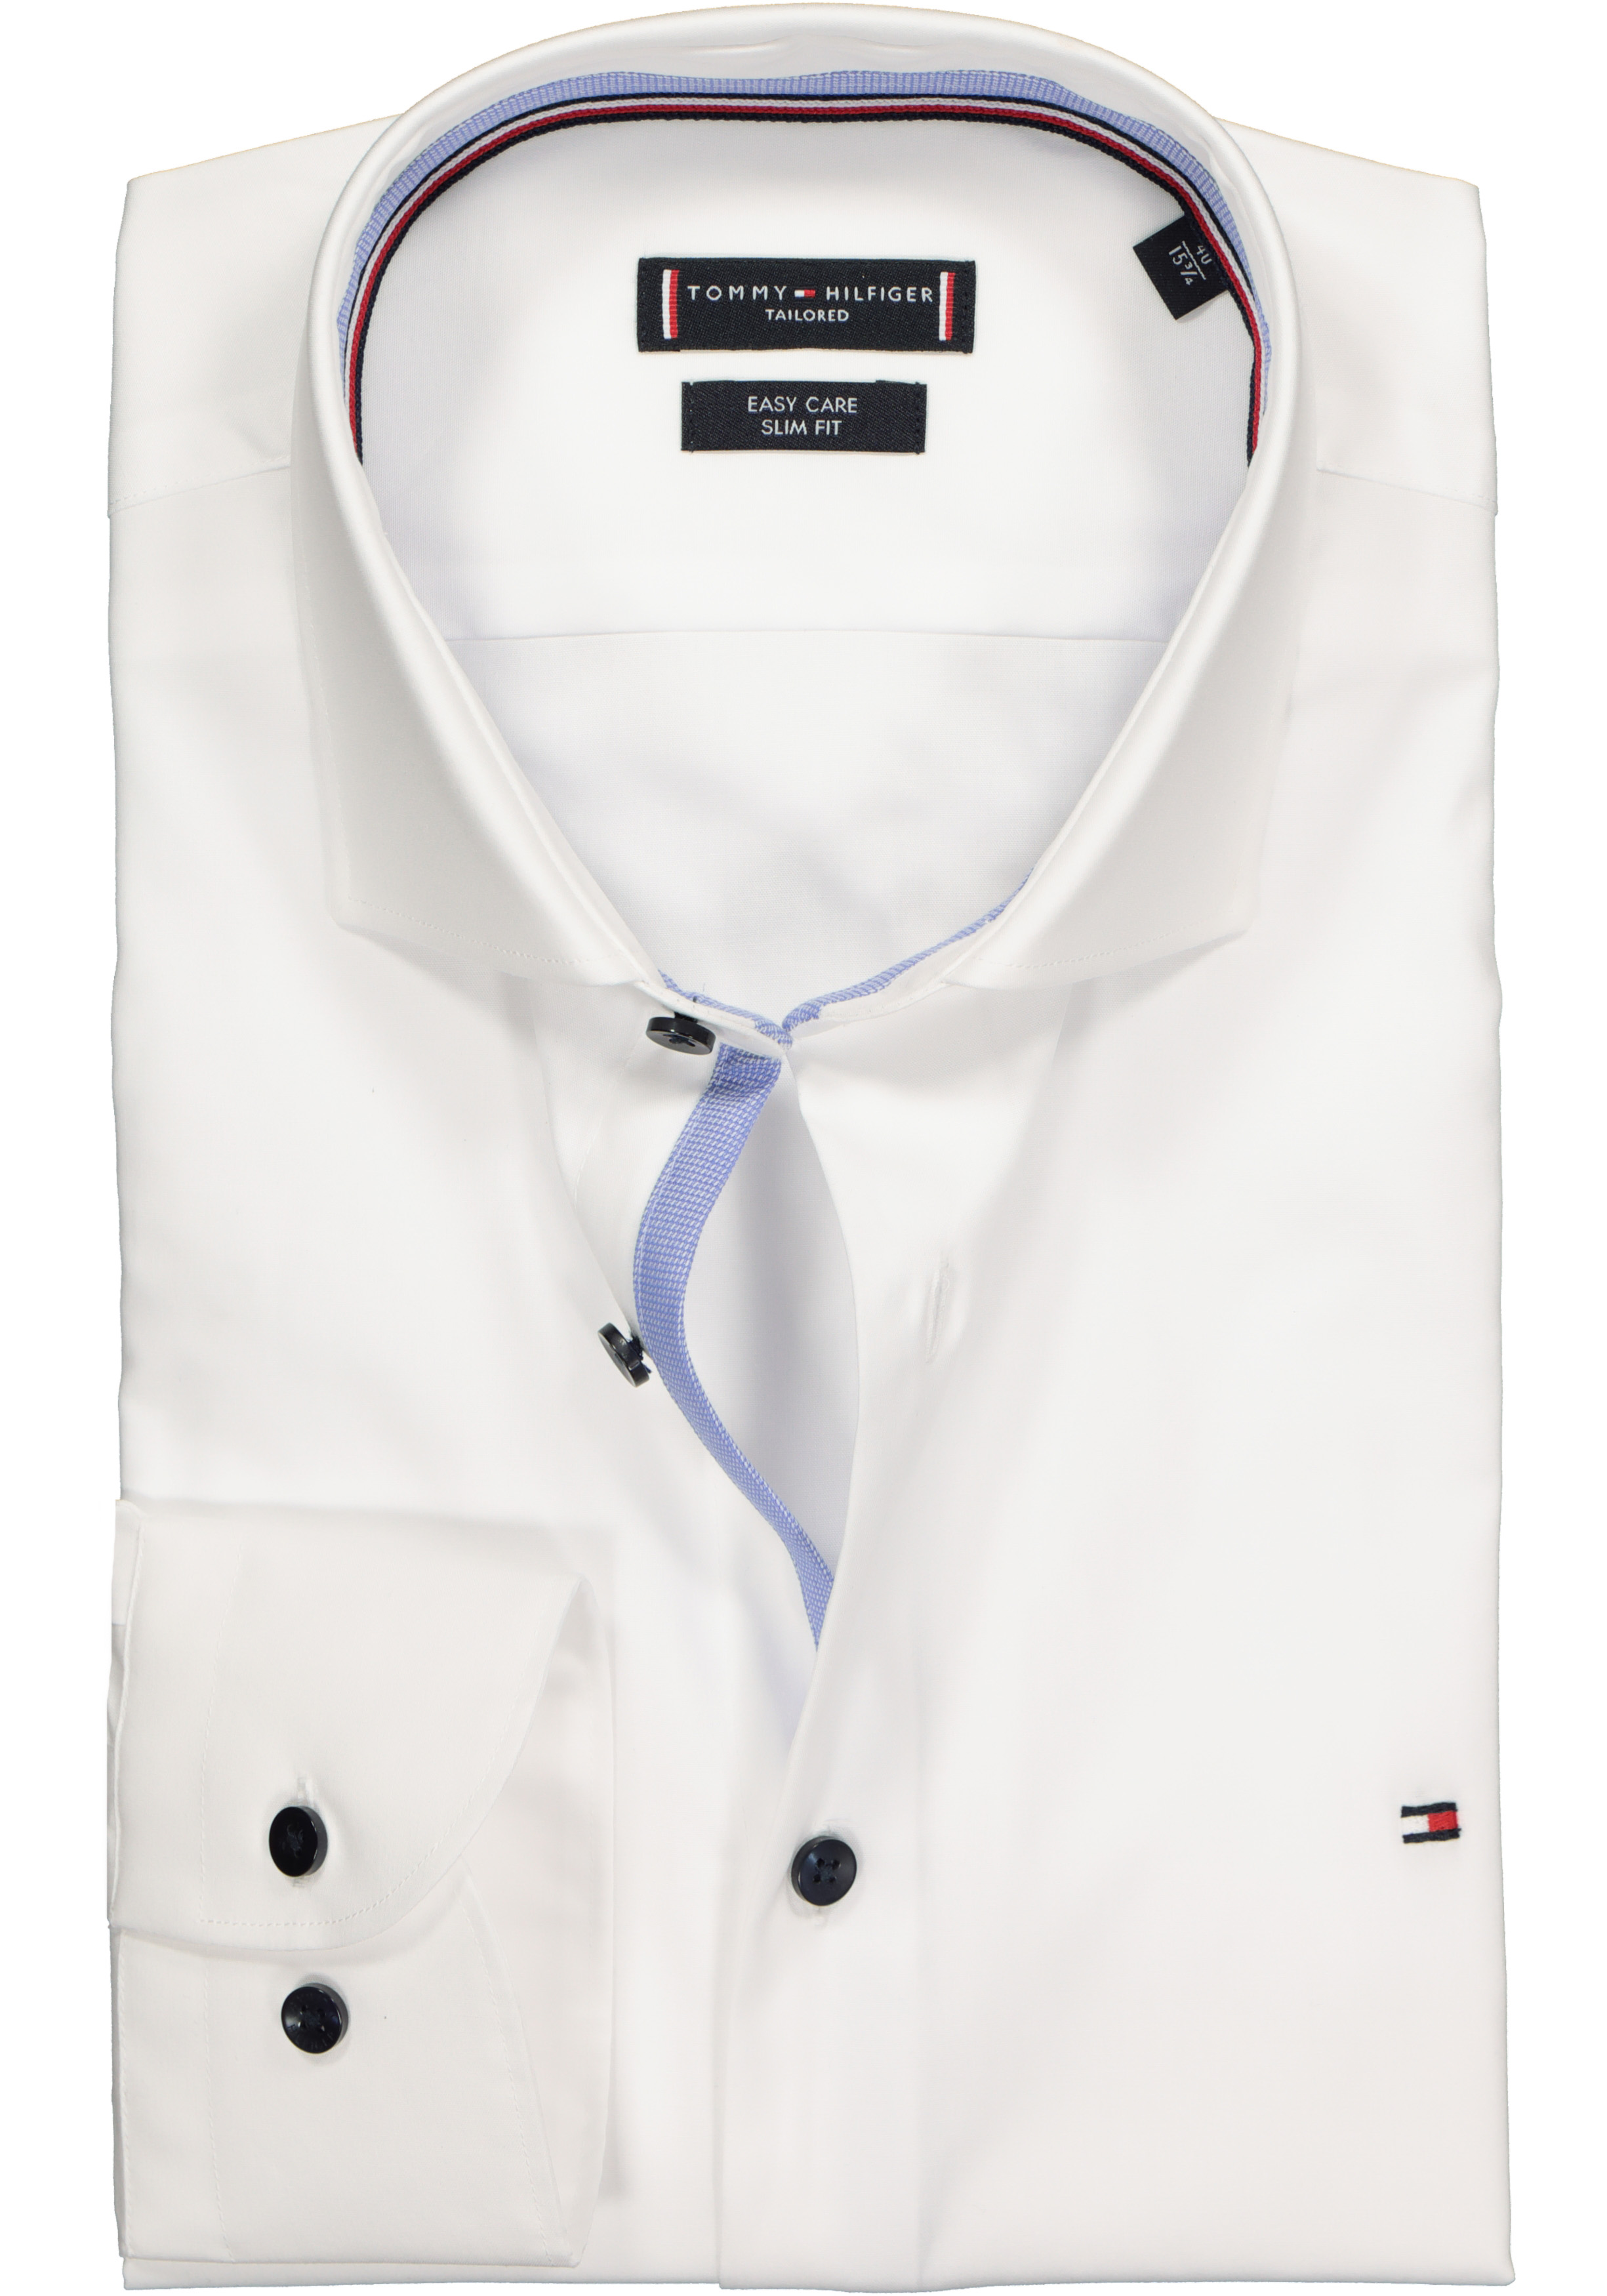 Klaar breedtegraad Bukken Tommy Hilfiger Classic slim fit overhemd, wit (contrast) - Zomer SALE tot  50% korting